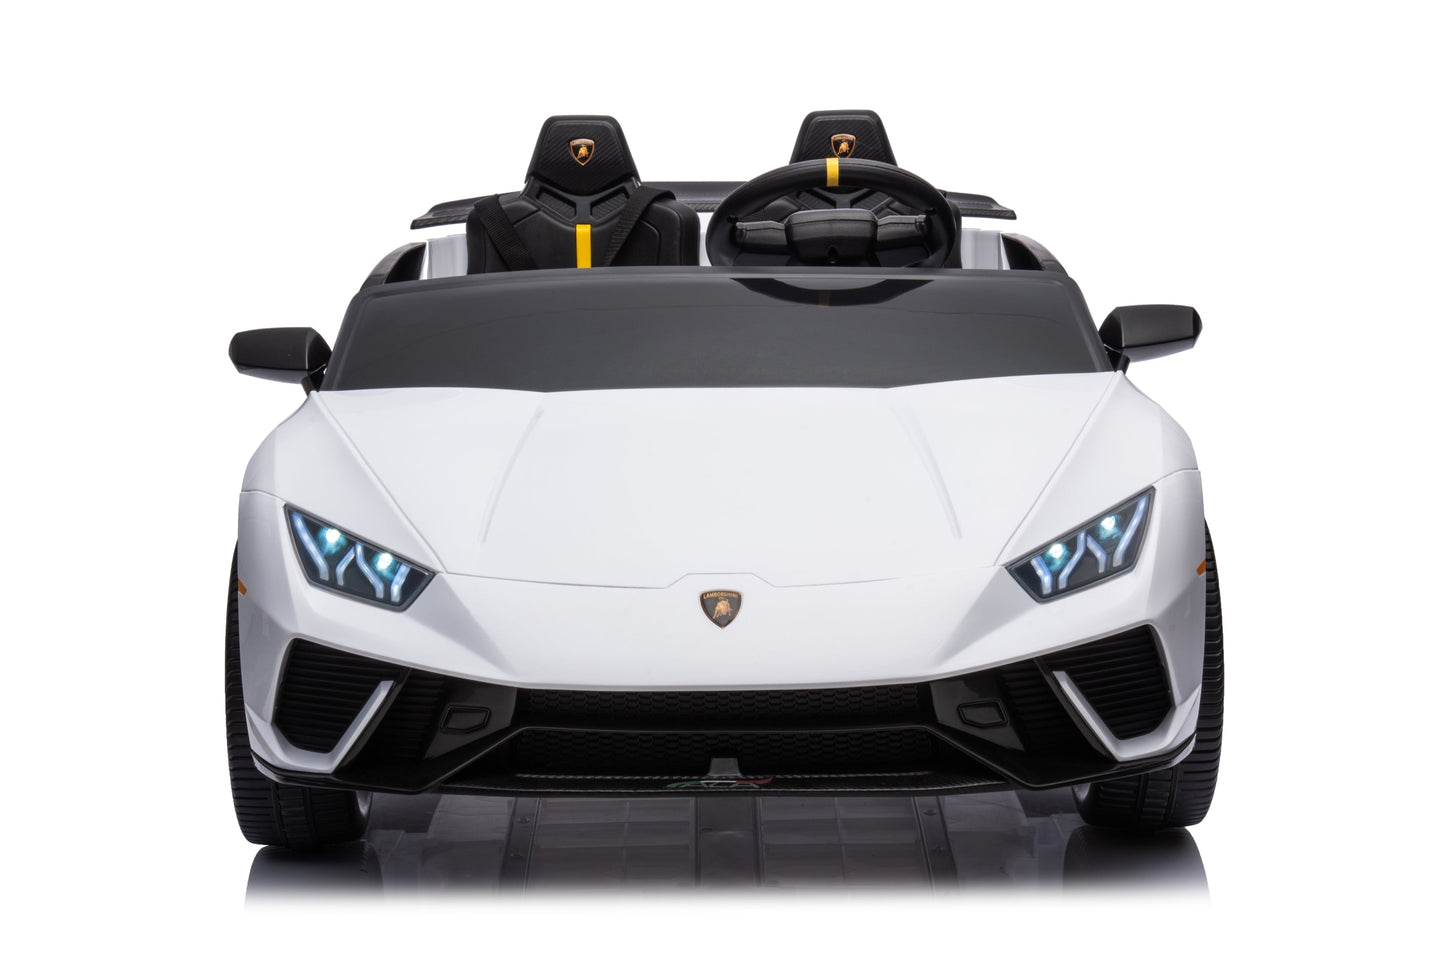 Freddo Toys Lamborghini Huracan